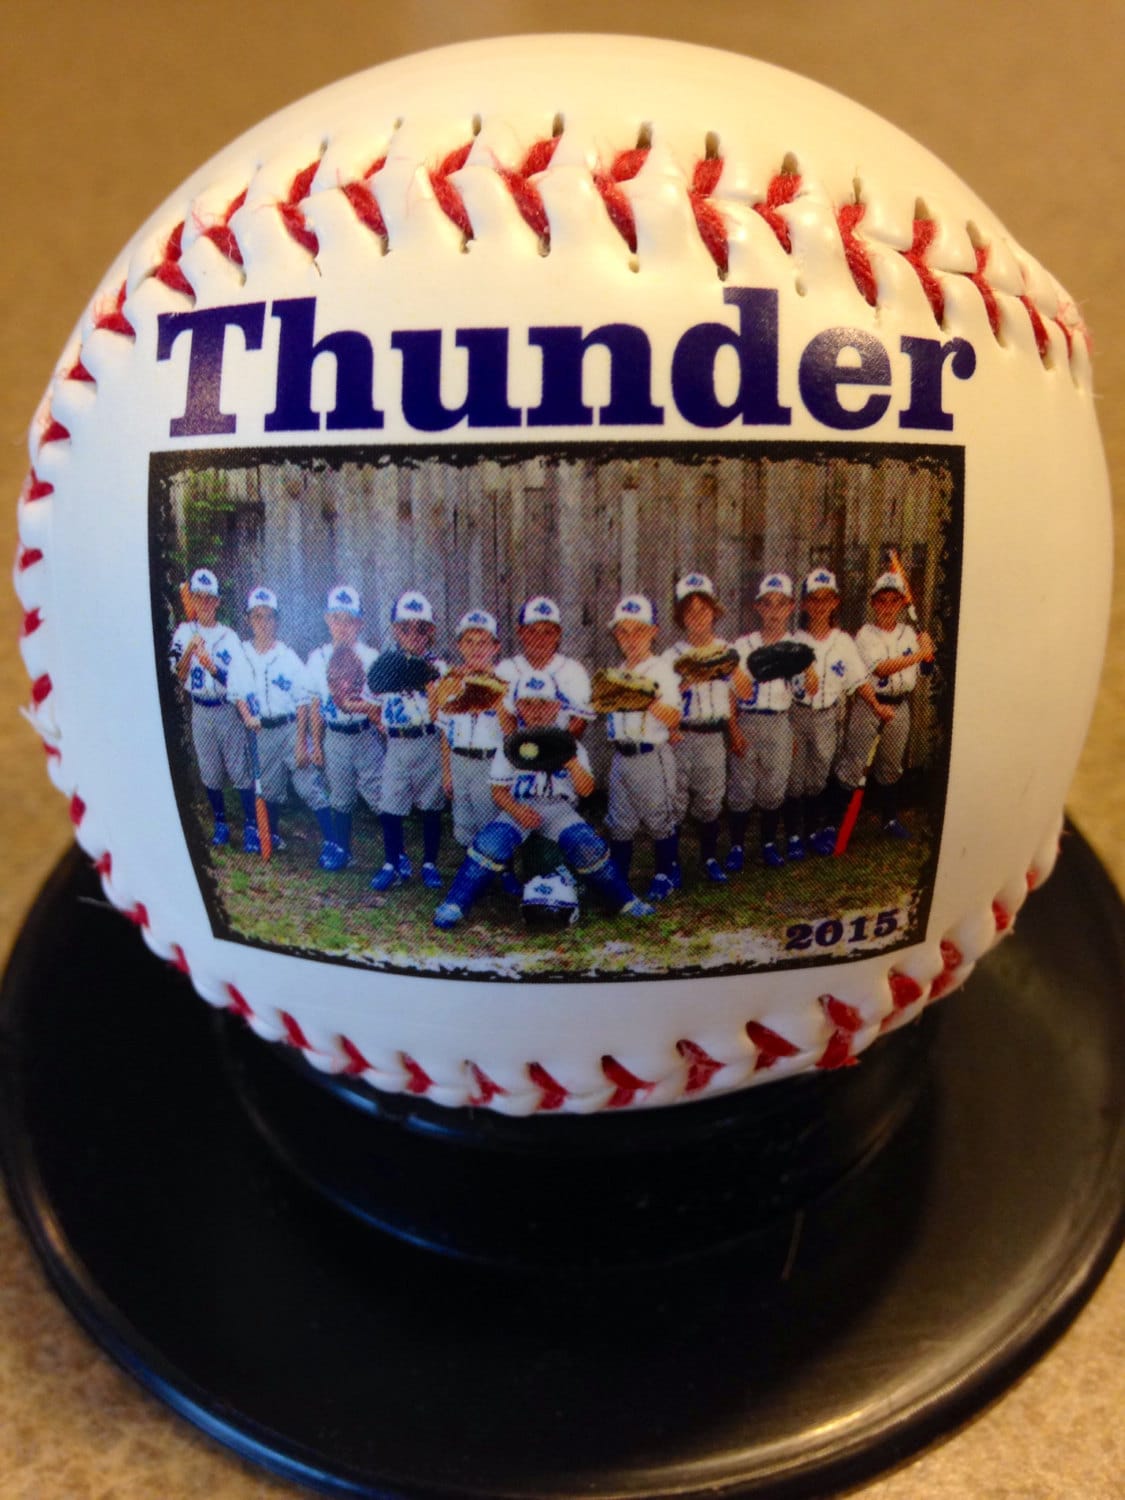 Personalized Custom Made Baseballs with Your Photos, Baseball Gift for Baseball Coach, Seniors, Team Awards, Sponsors, Awards, Memorabilia